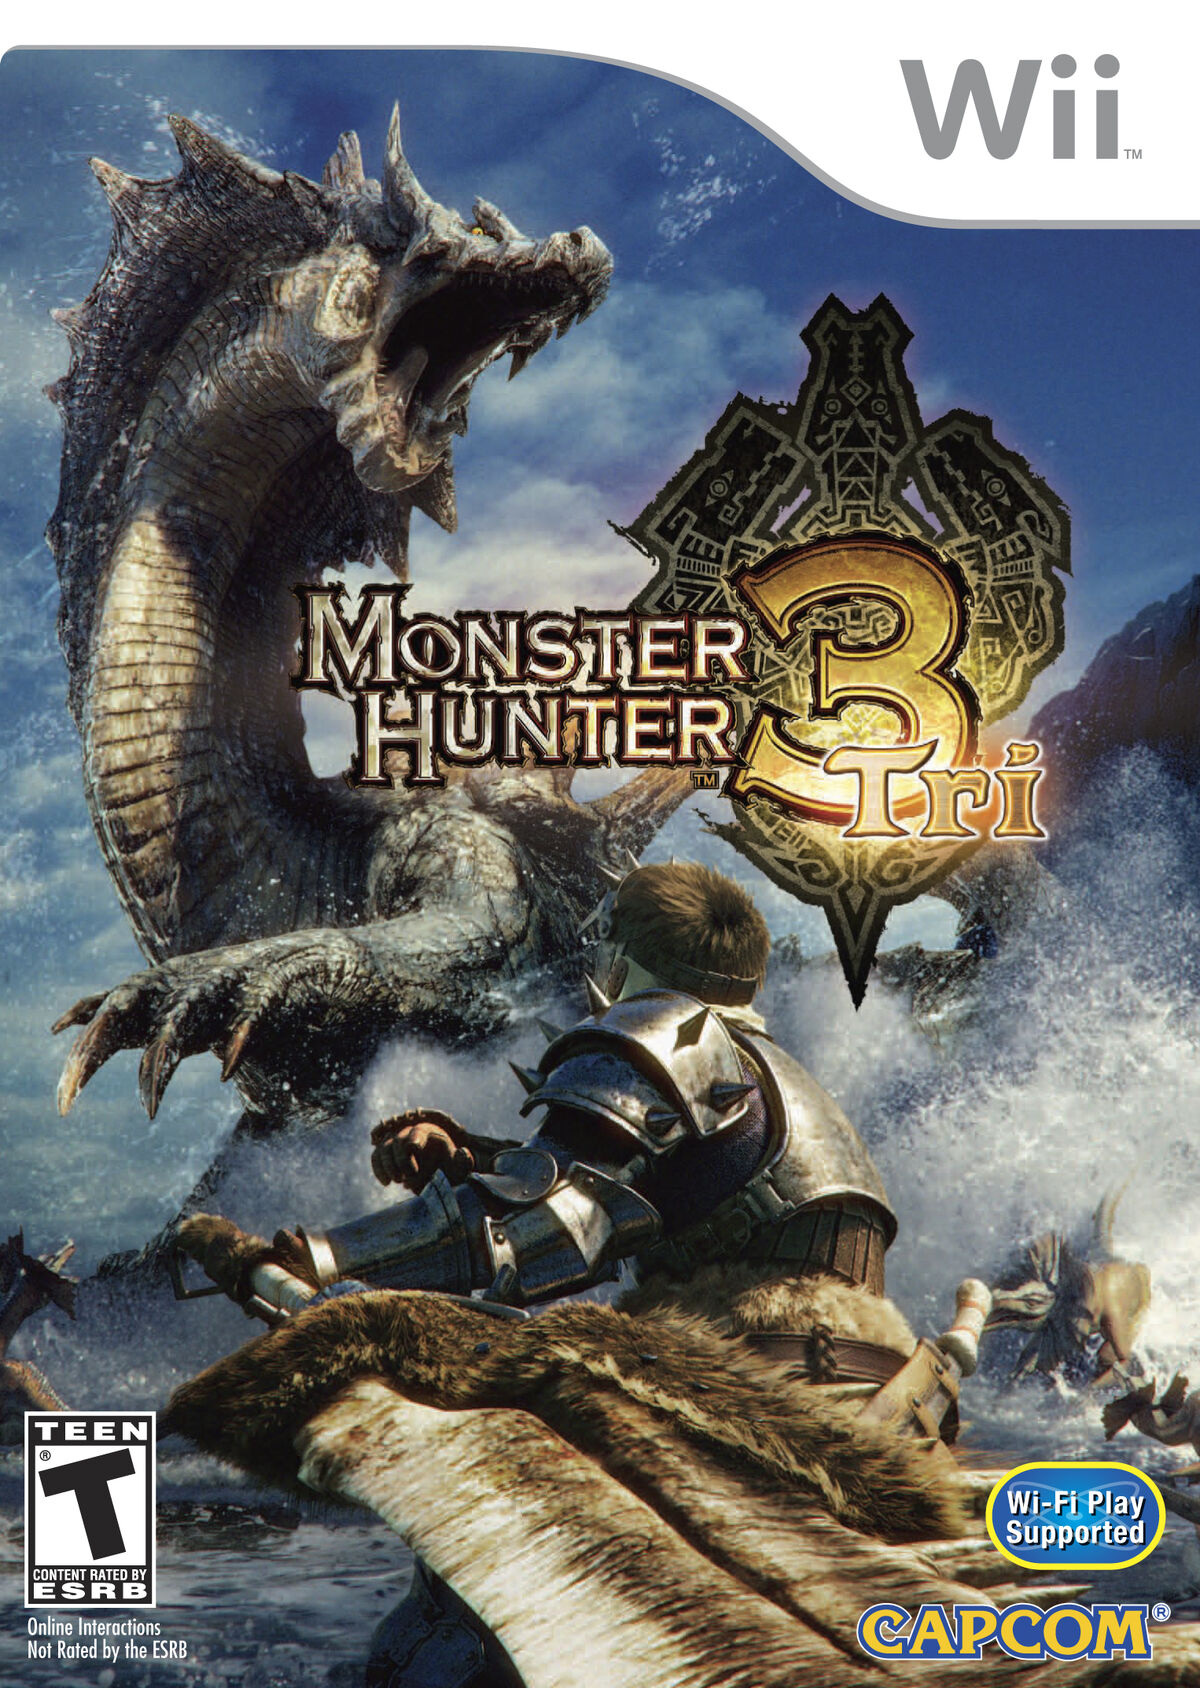 Monster Hunter 2 (Video Game 2006) - IMDb